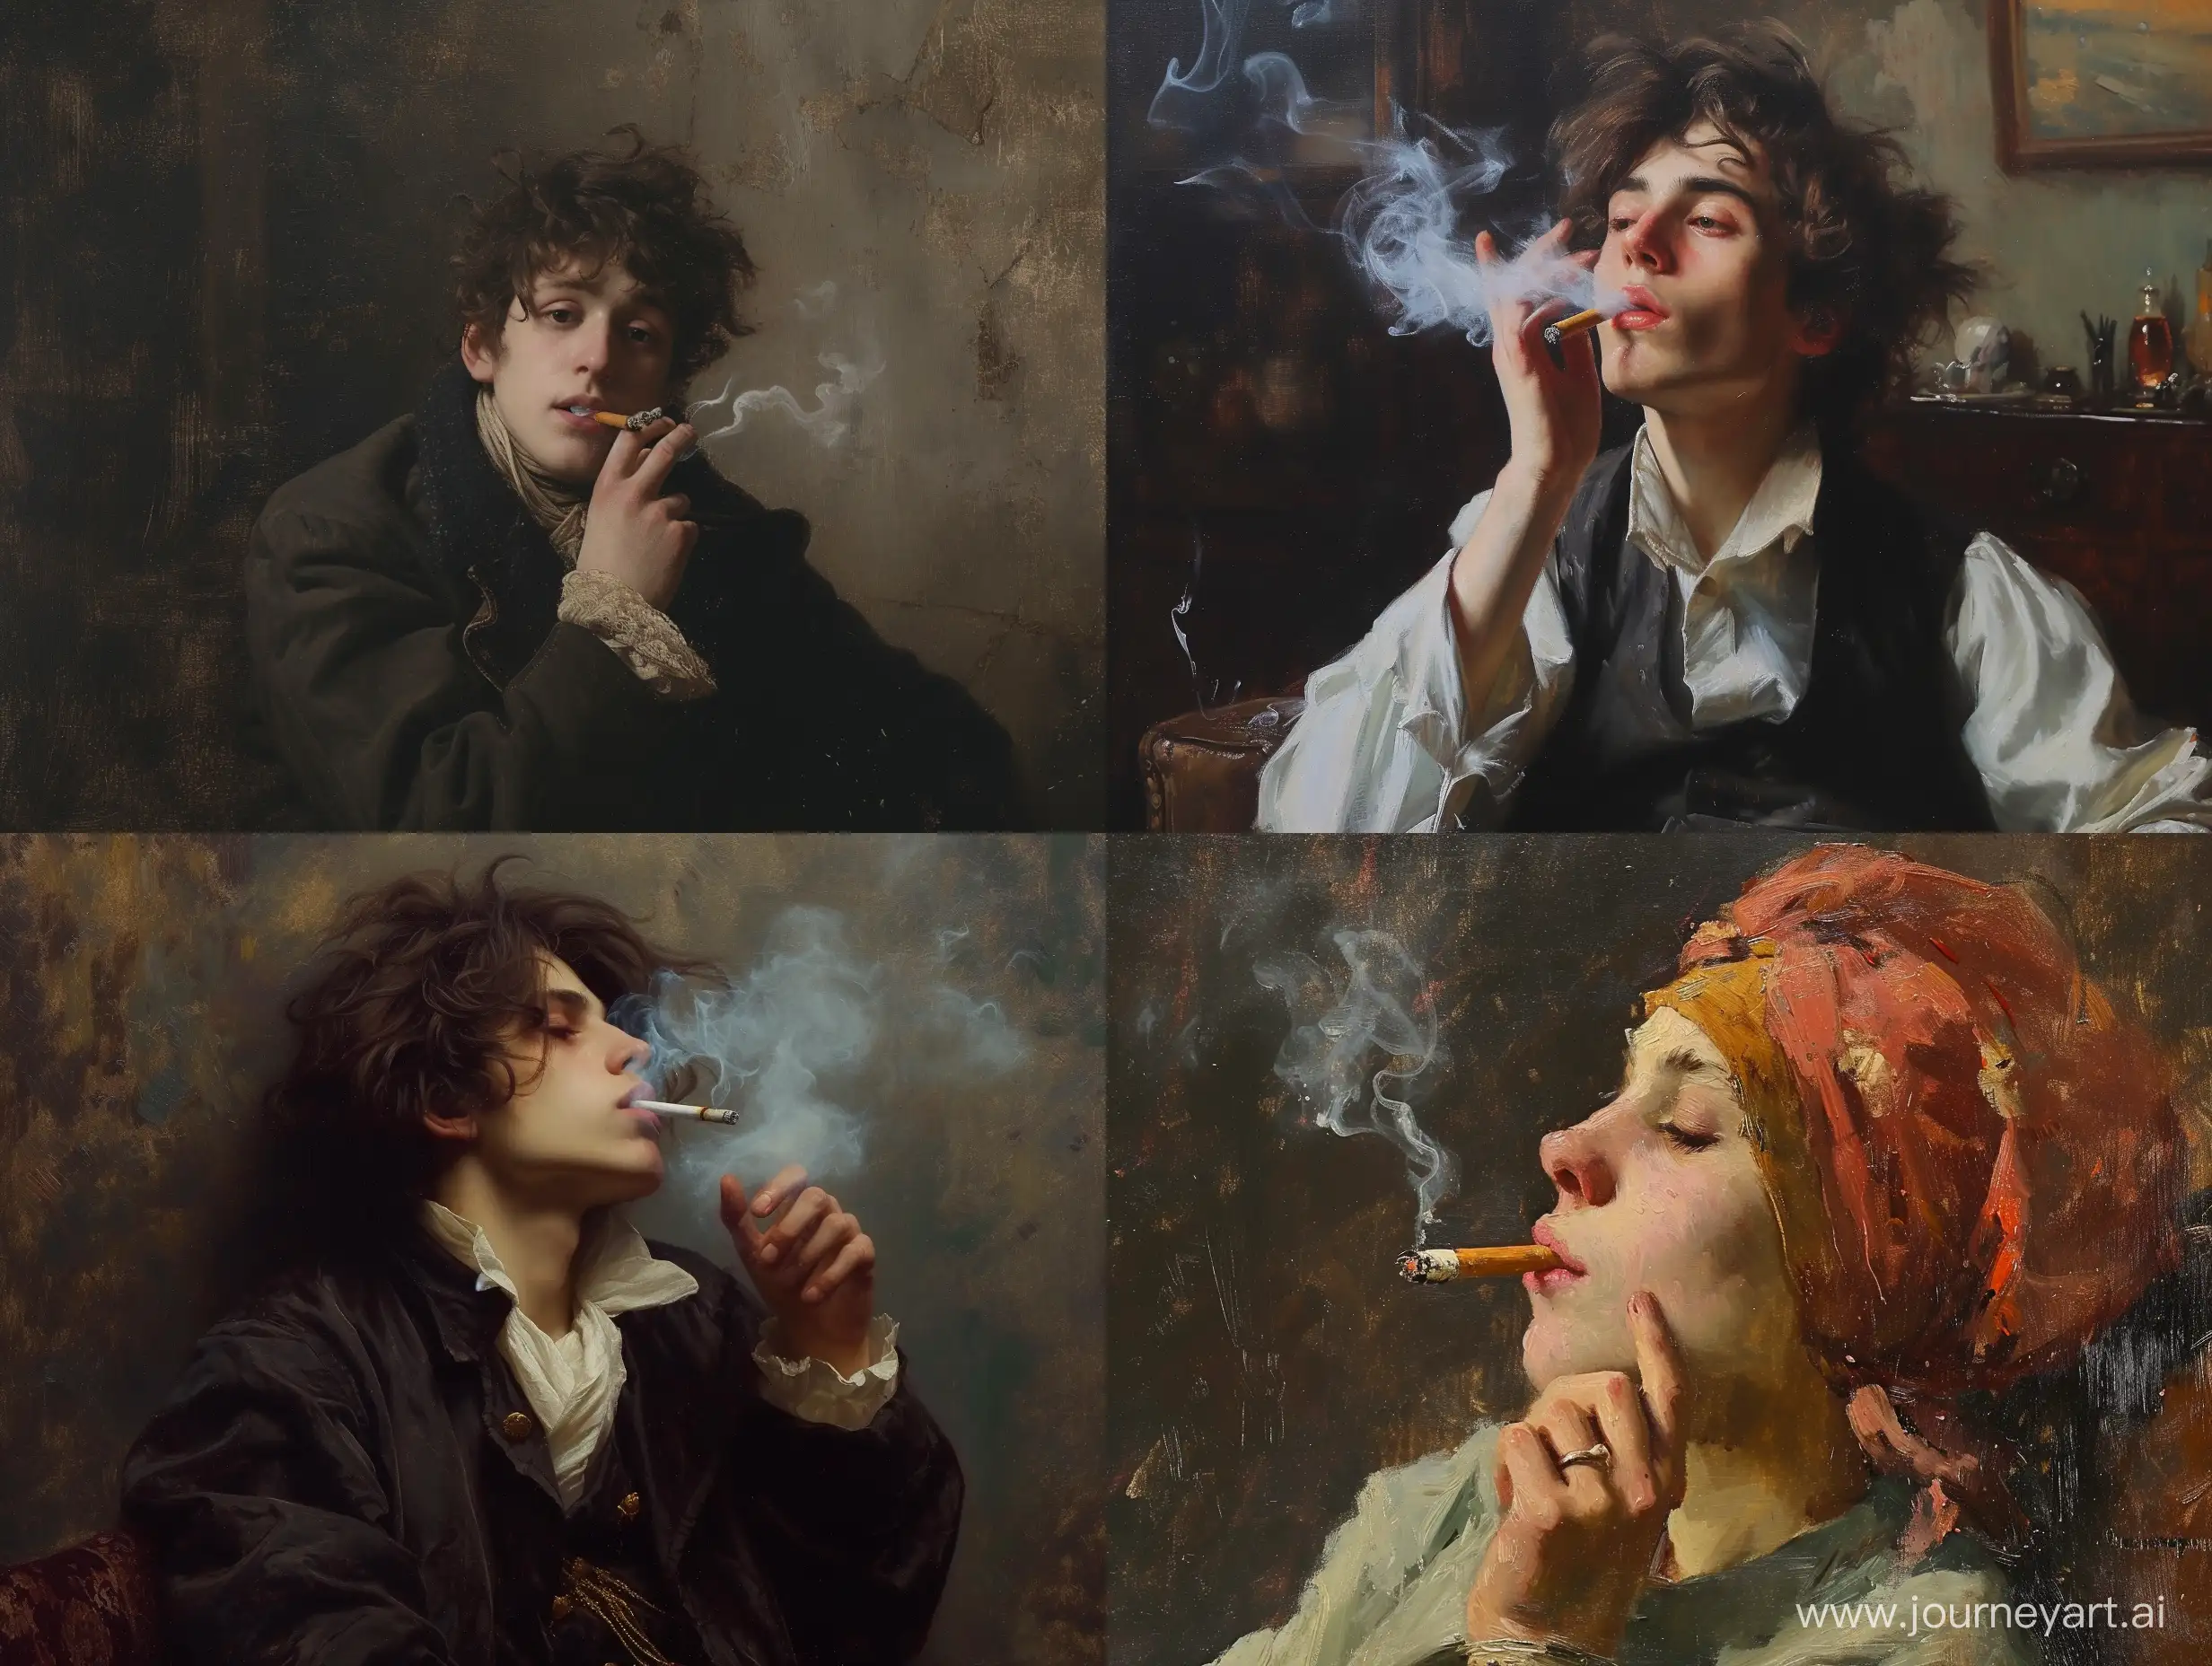 St-Petersburg-Youth-Smoking-Capturing-19thCentury-Russian-Artistry